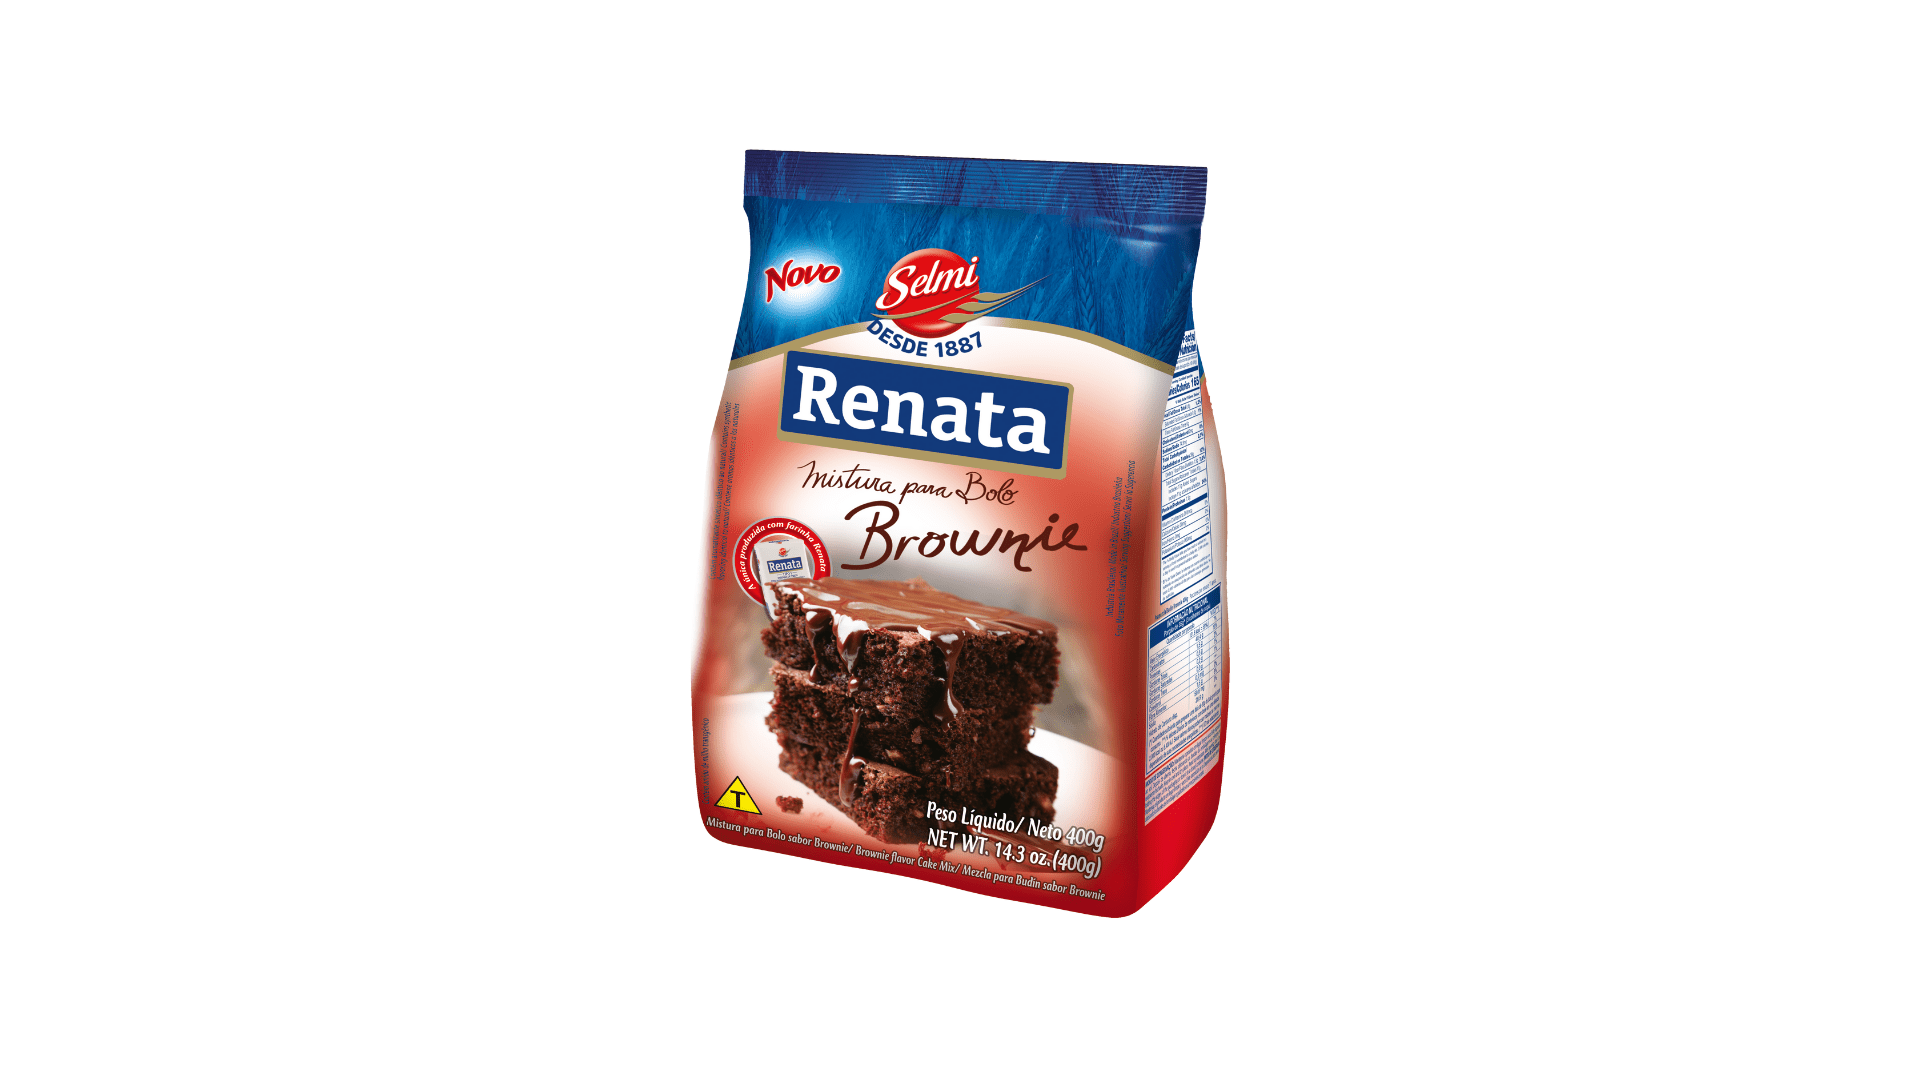 Featured image for “Renata lança Mistura para Bolo sabor Brownie”